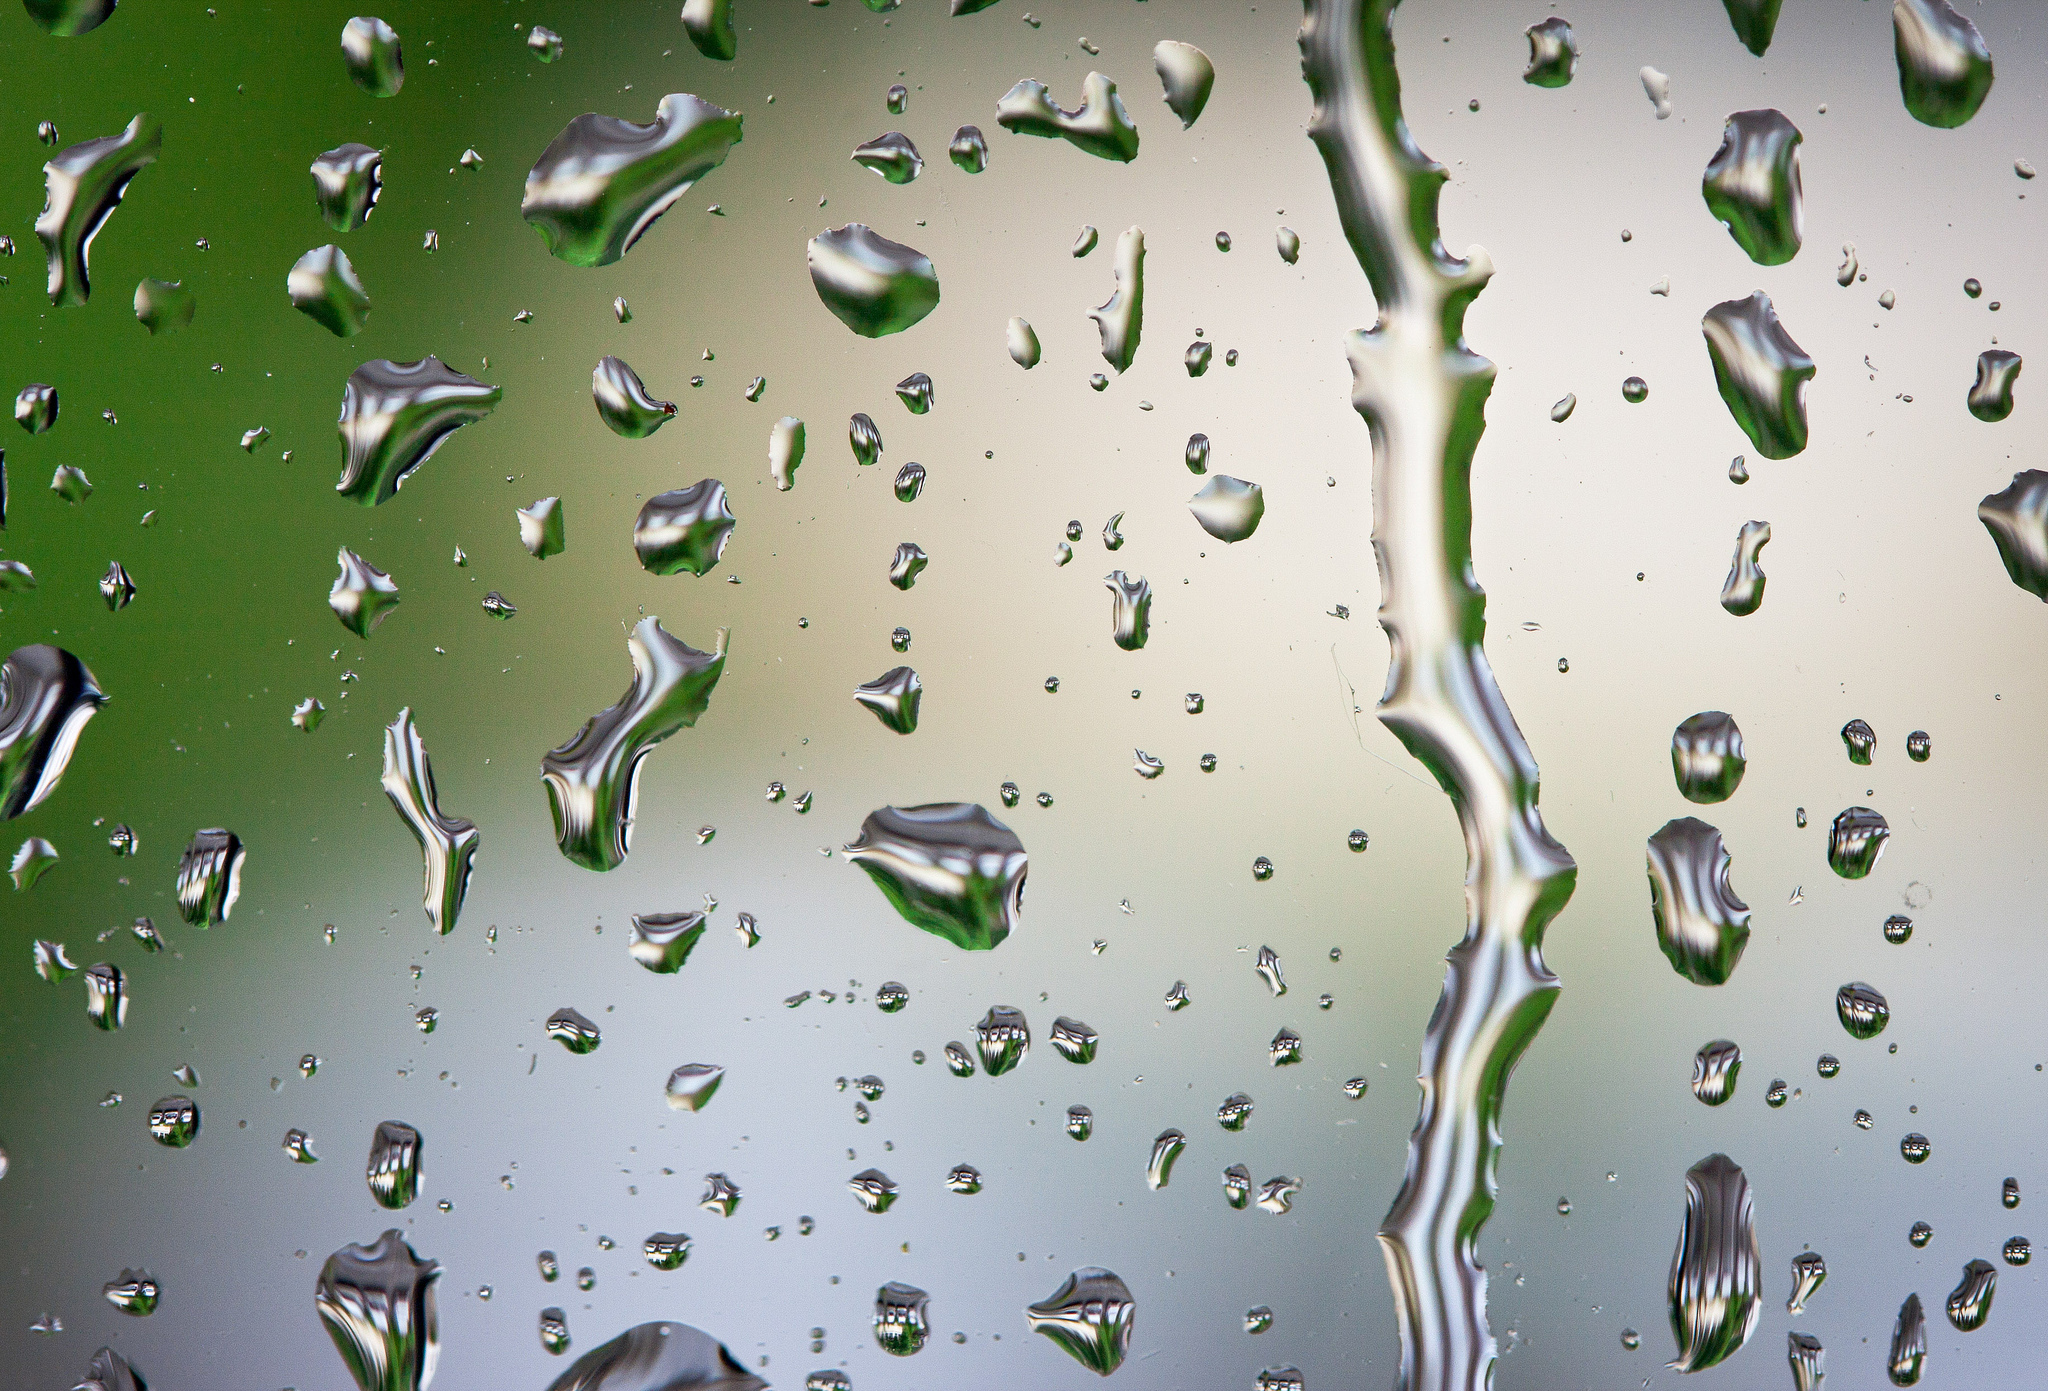 Едва заметно будто капли воды. Капли дождя. Капли на стекле. Дождевые капли на стекле. Капли воды стекают.